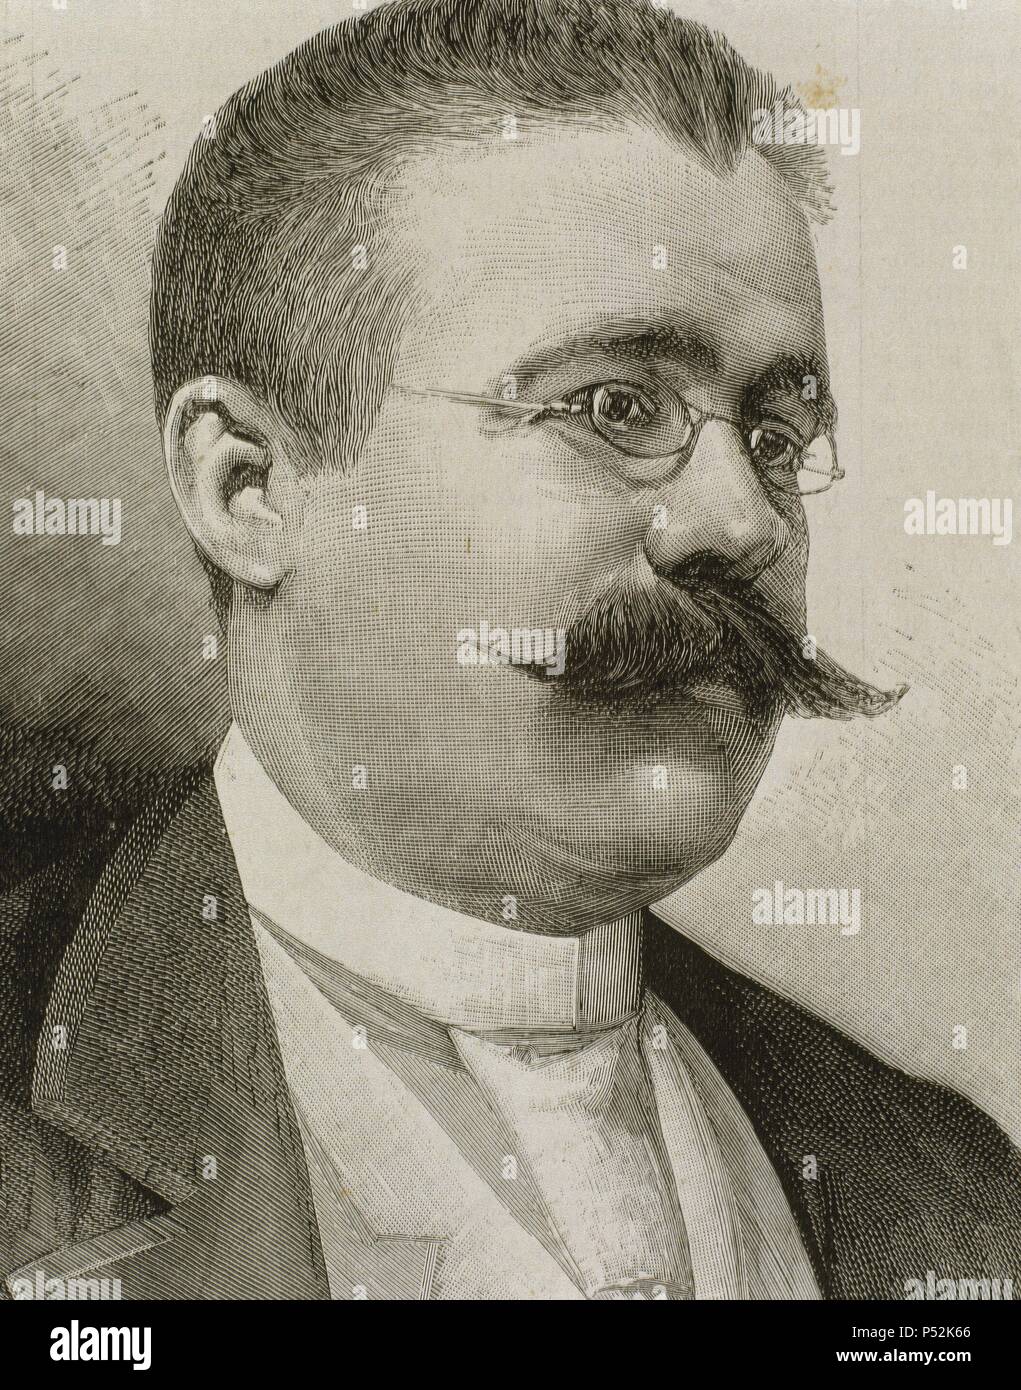 Ricardo Bellver (1845-1924). Escultor español. Retrato. Grabado. Siglo xix. Foto de stock